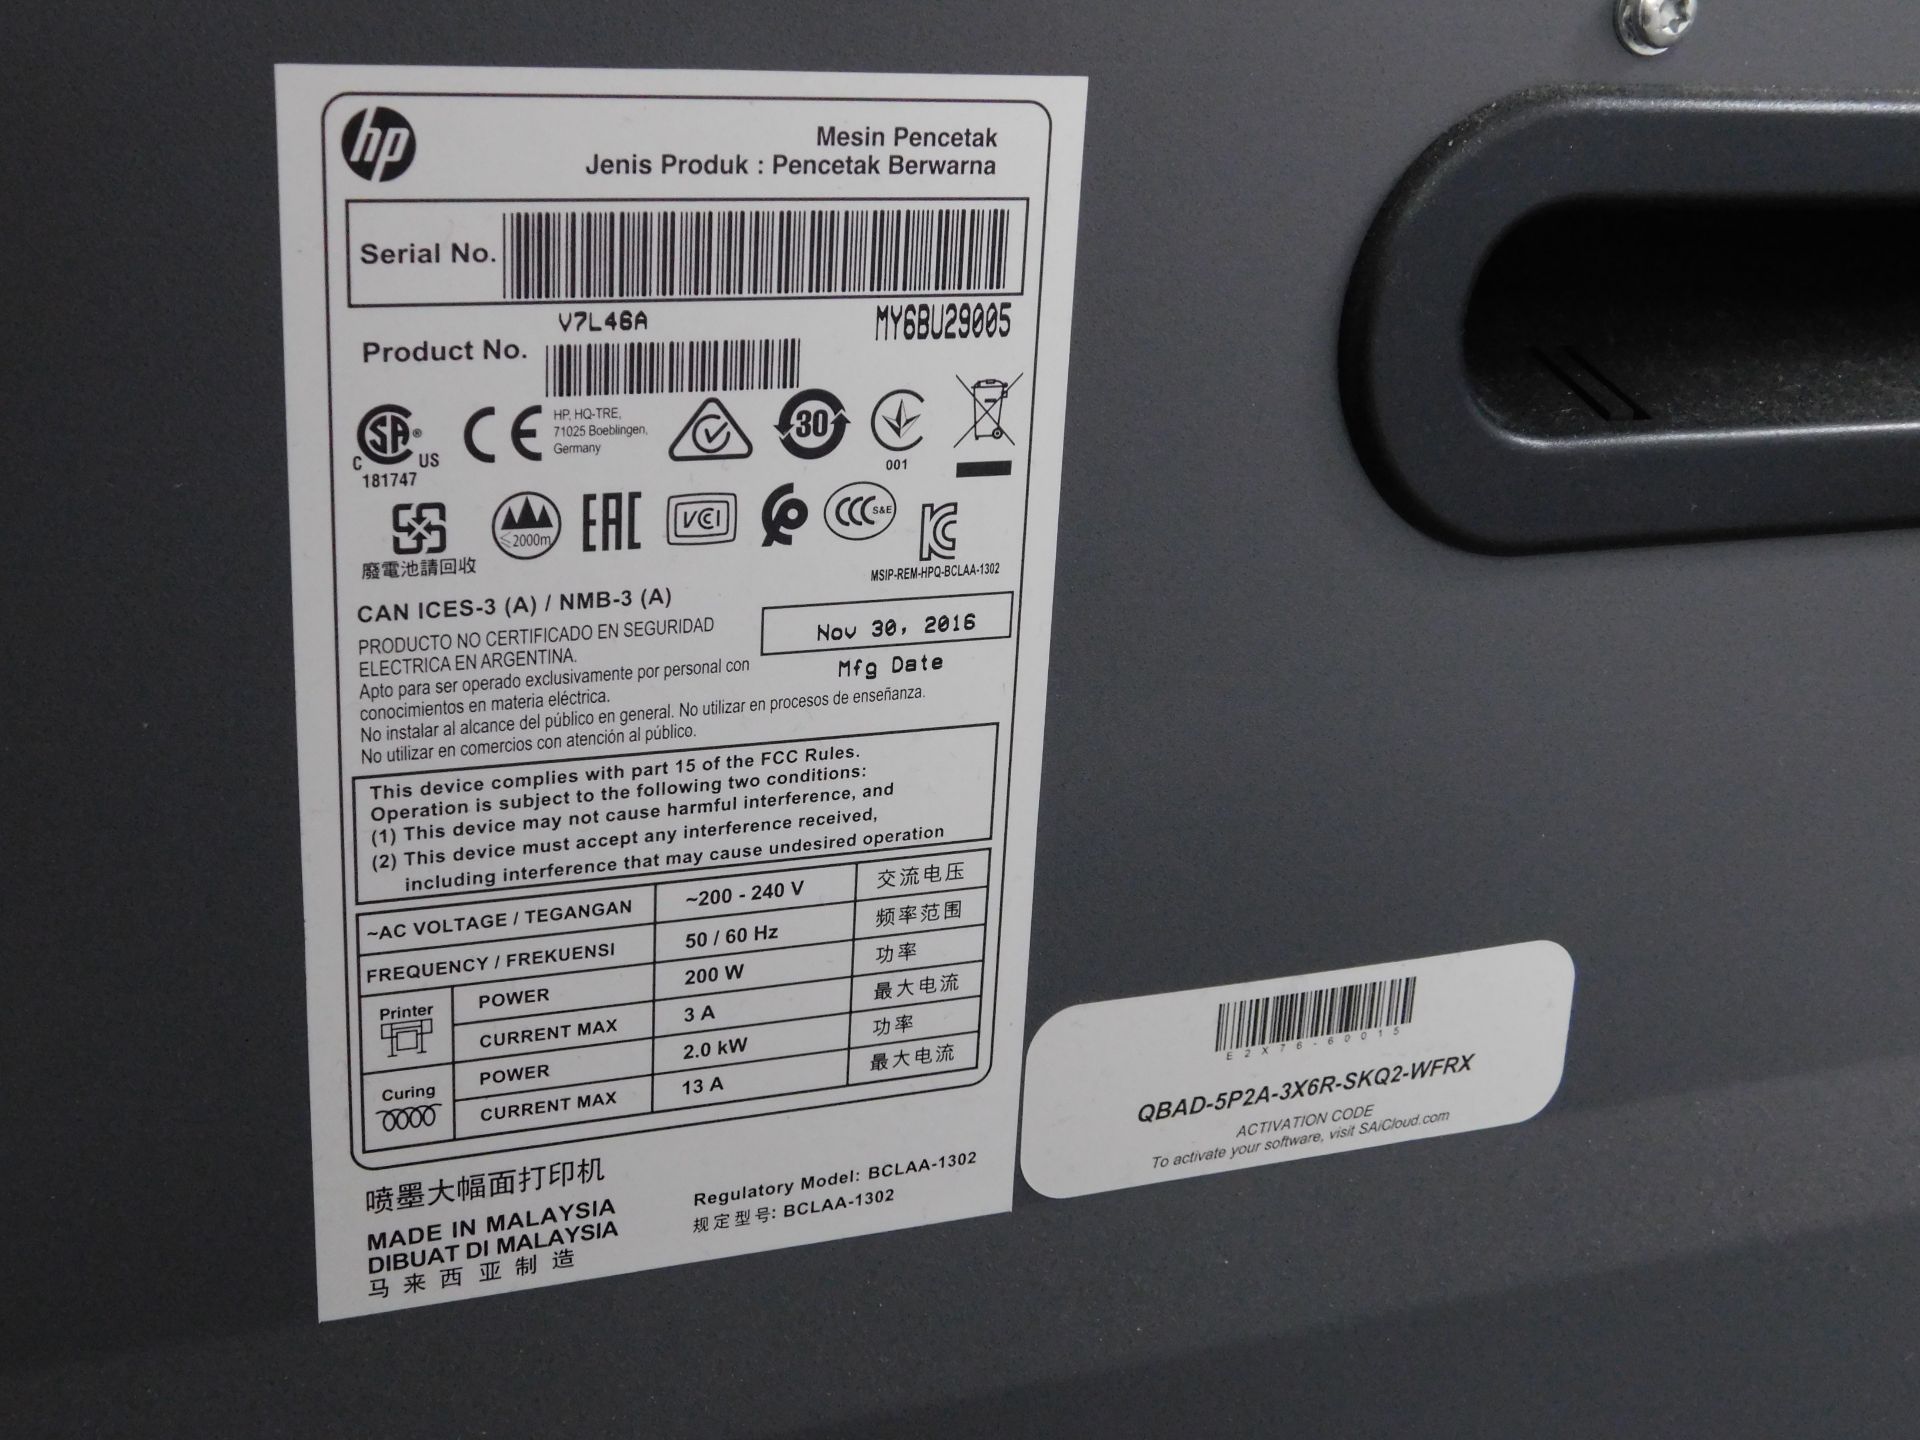 HP Latex 315 – V7L48A Wide Format Printer (November 2016), Serial Number MY6BU29005 (Location: - Image 3 of 4